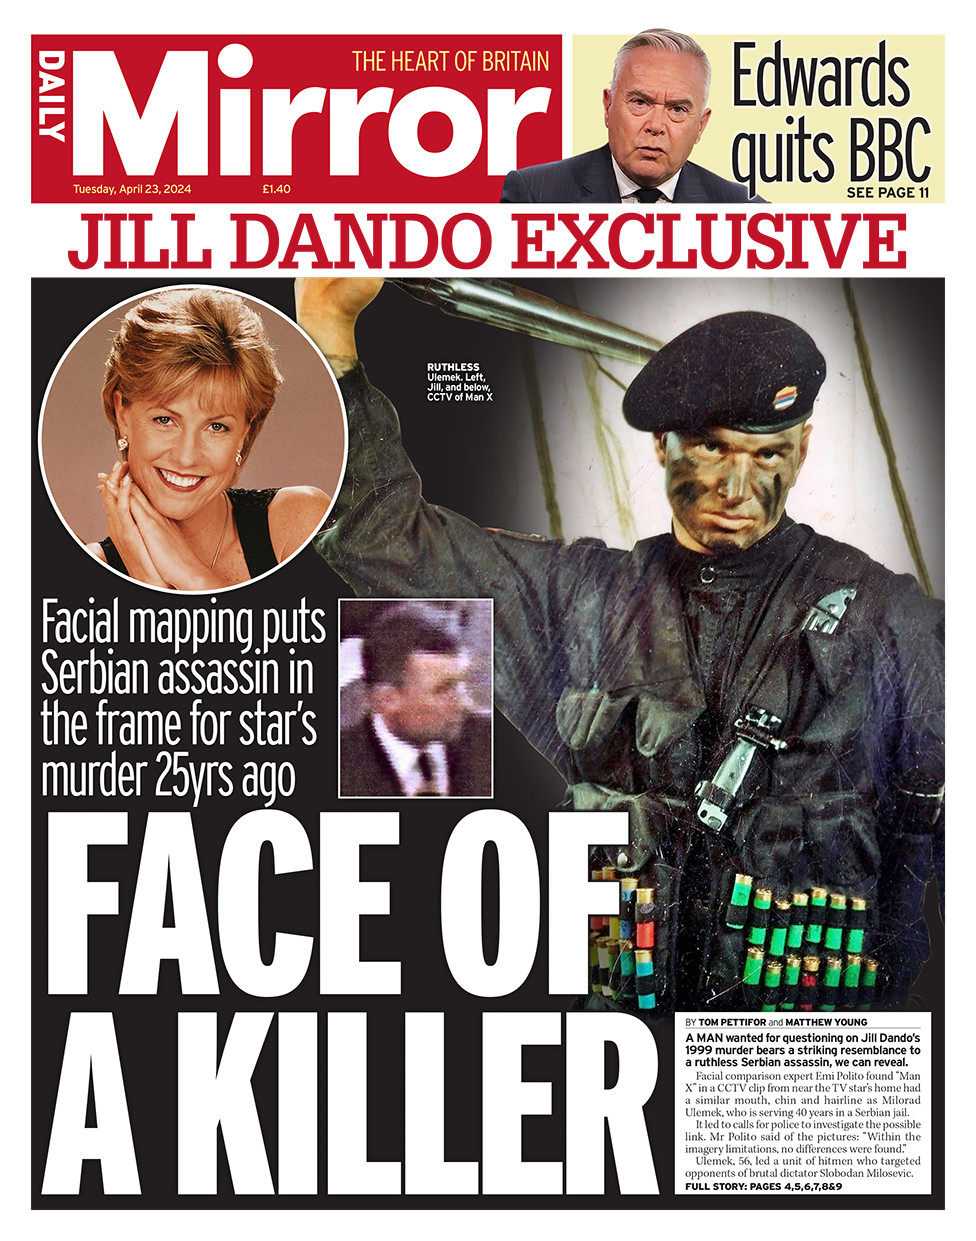 The headline in the Mirror reads: "Jill Dando exclusive: Face of a killer".